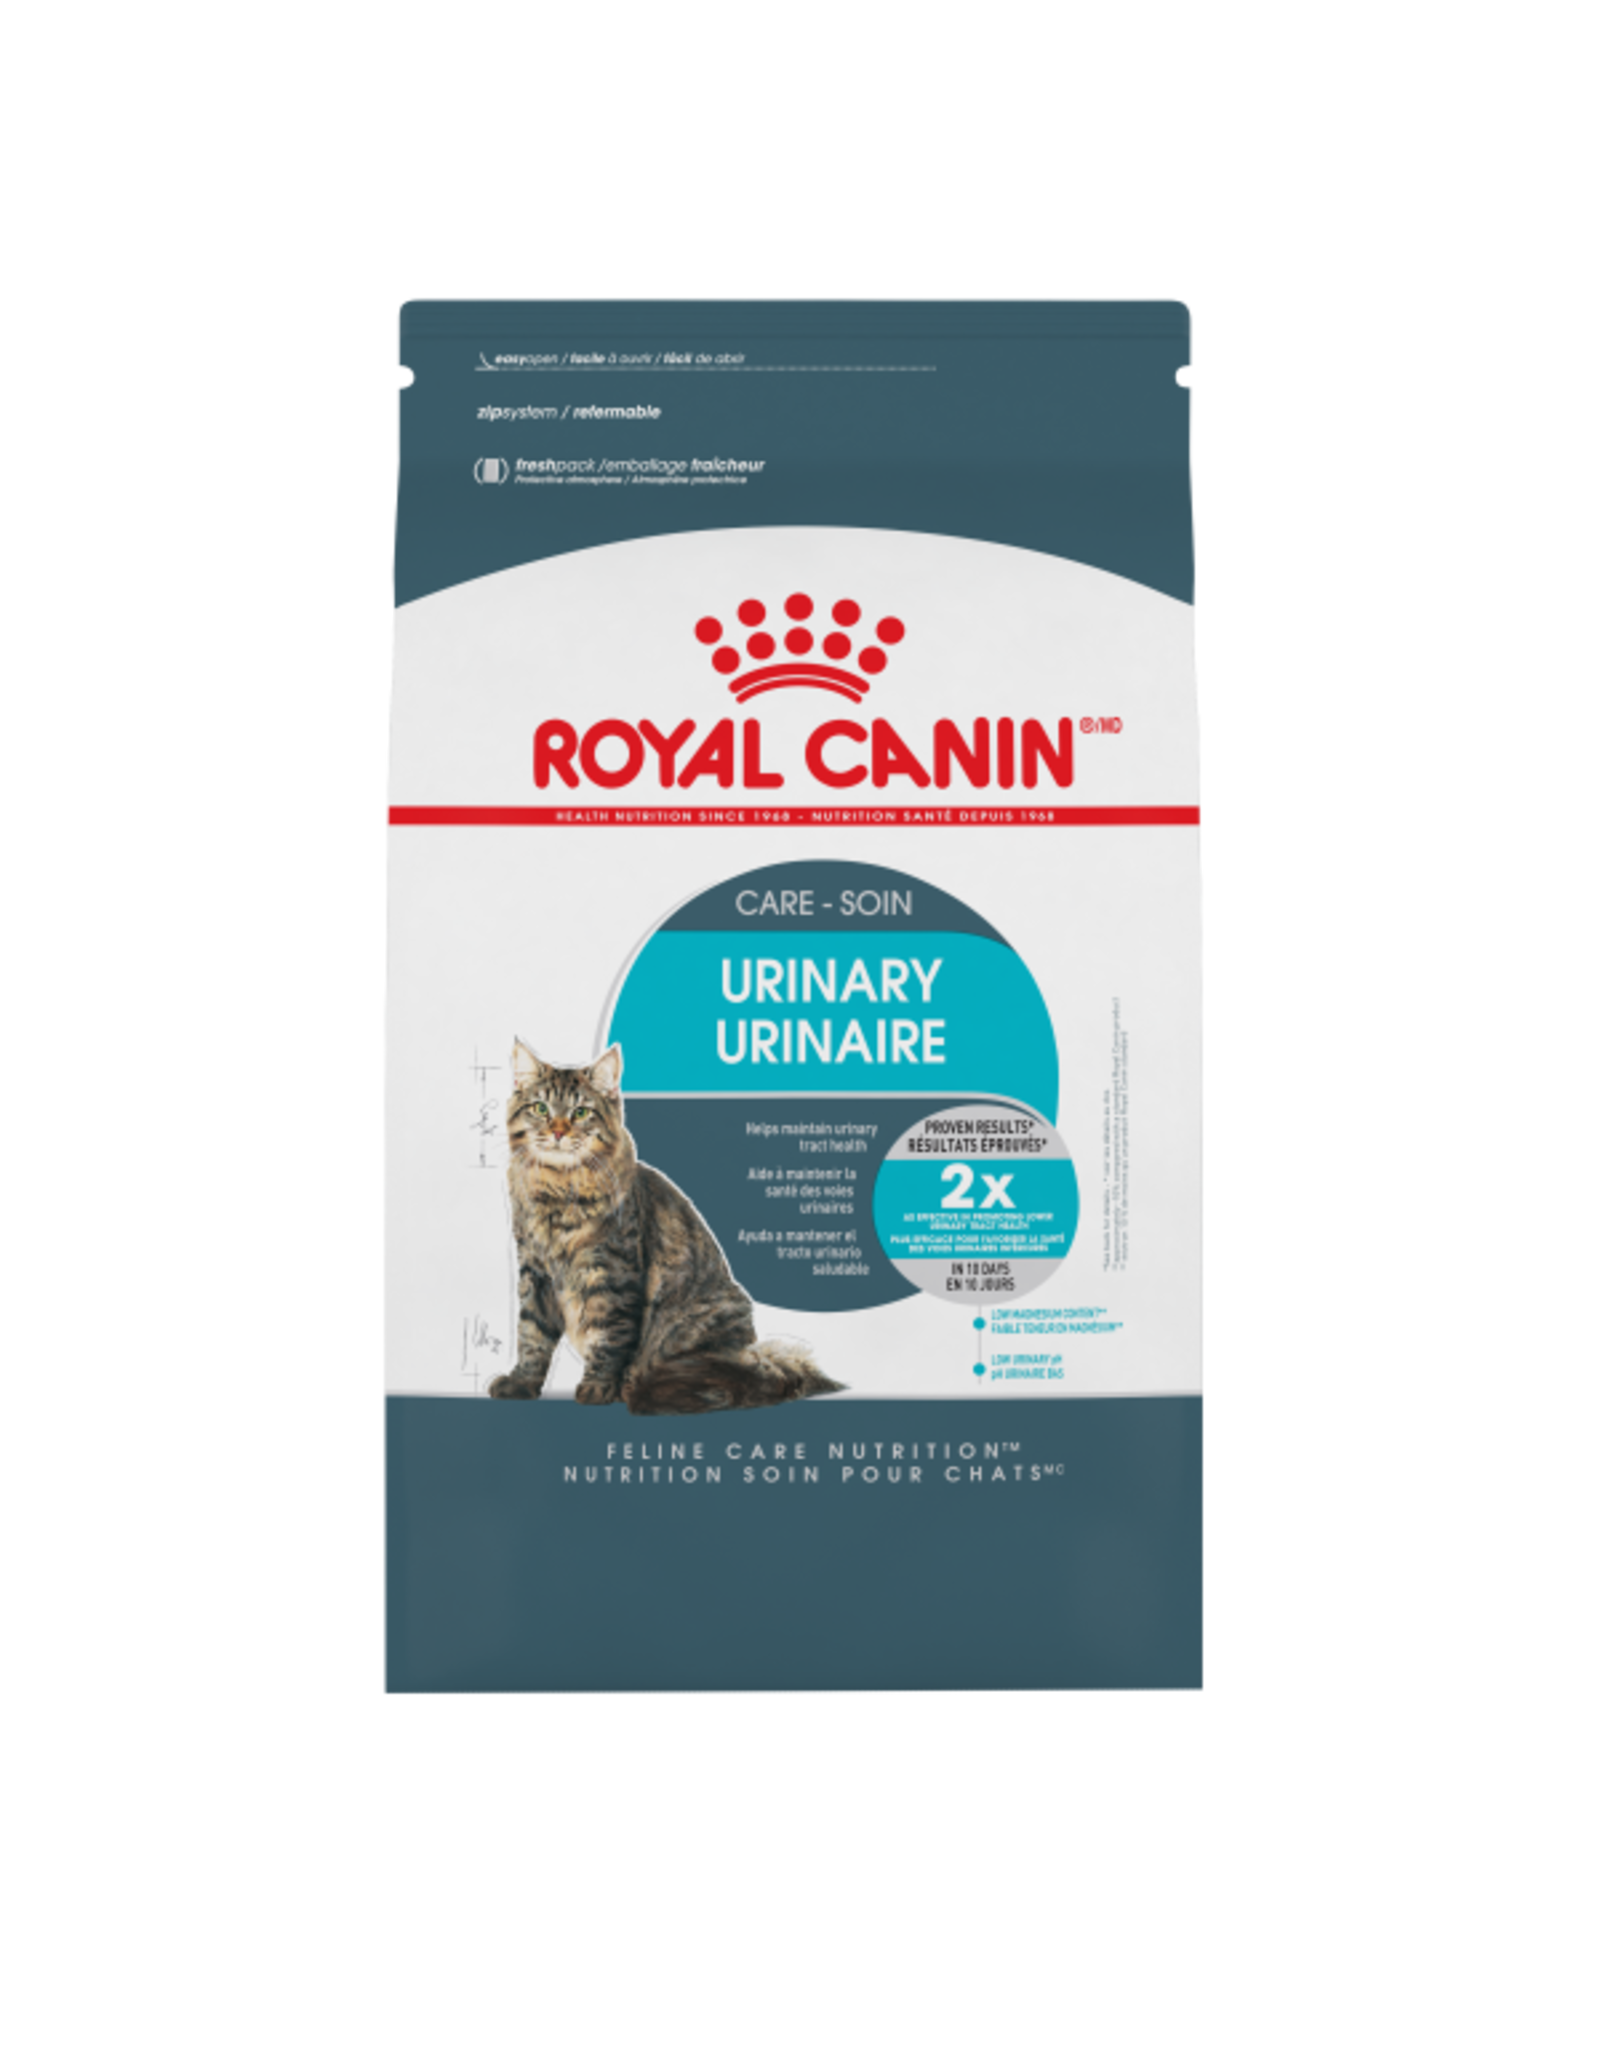 Royal Canin Royal Canin Urinary Care [CAT]